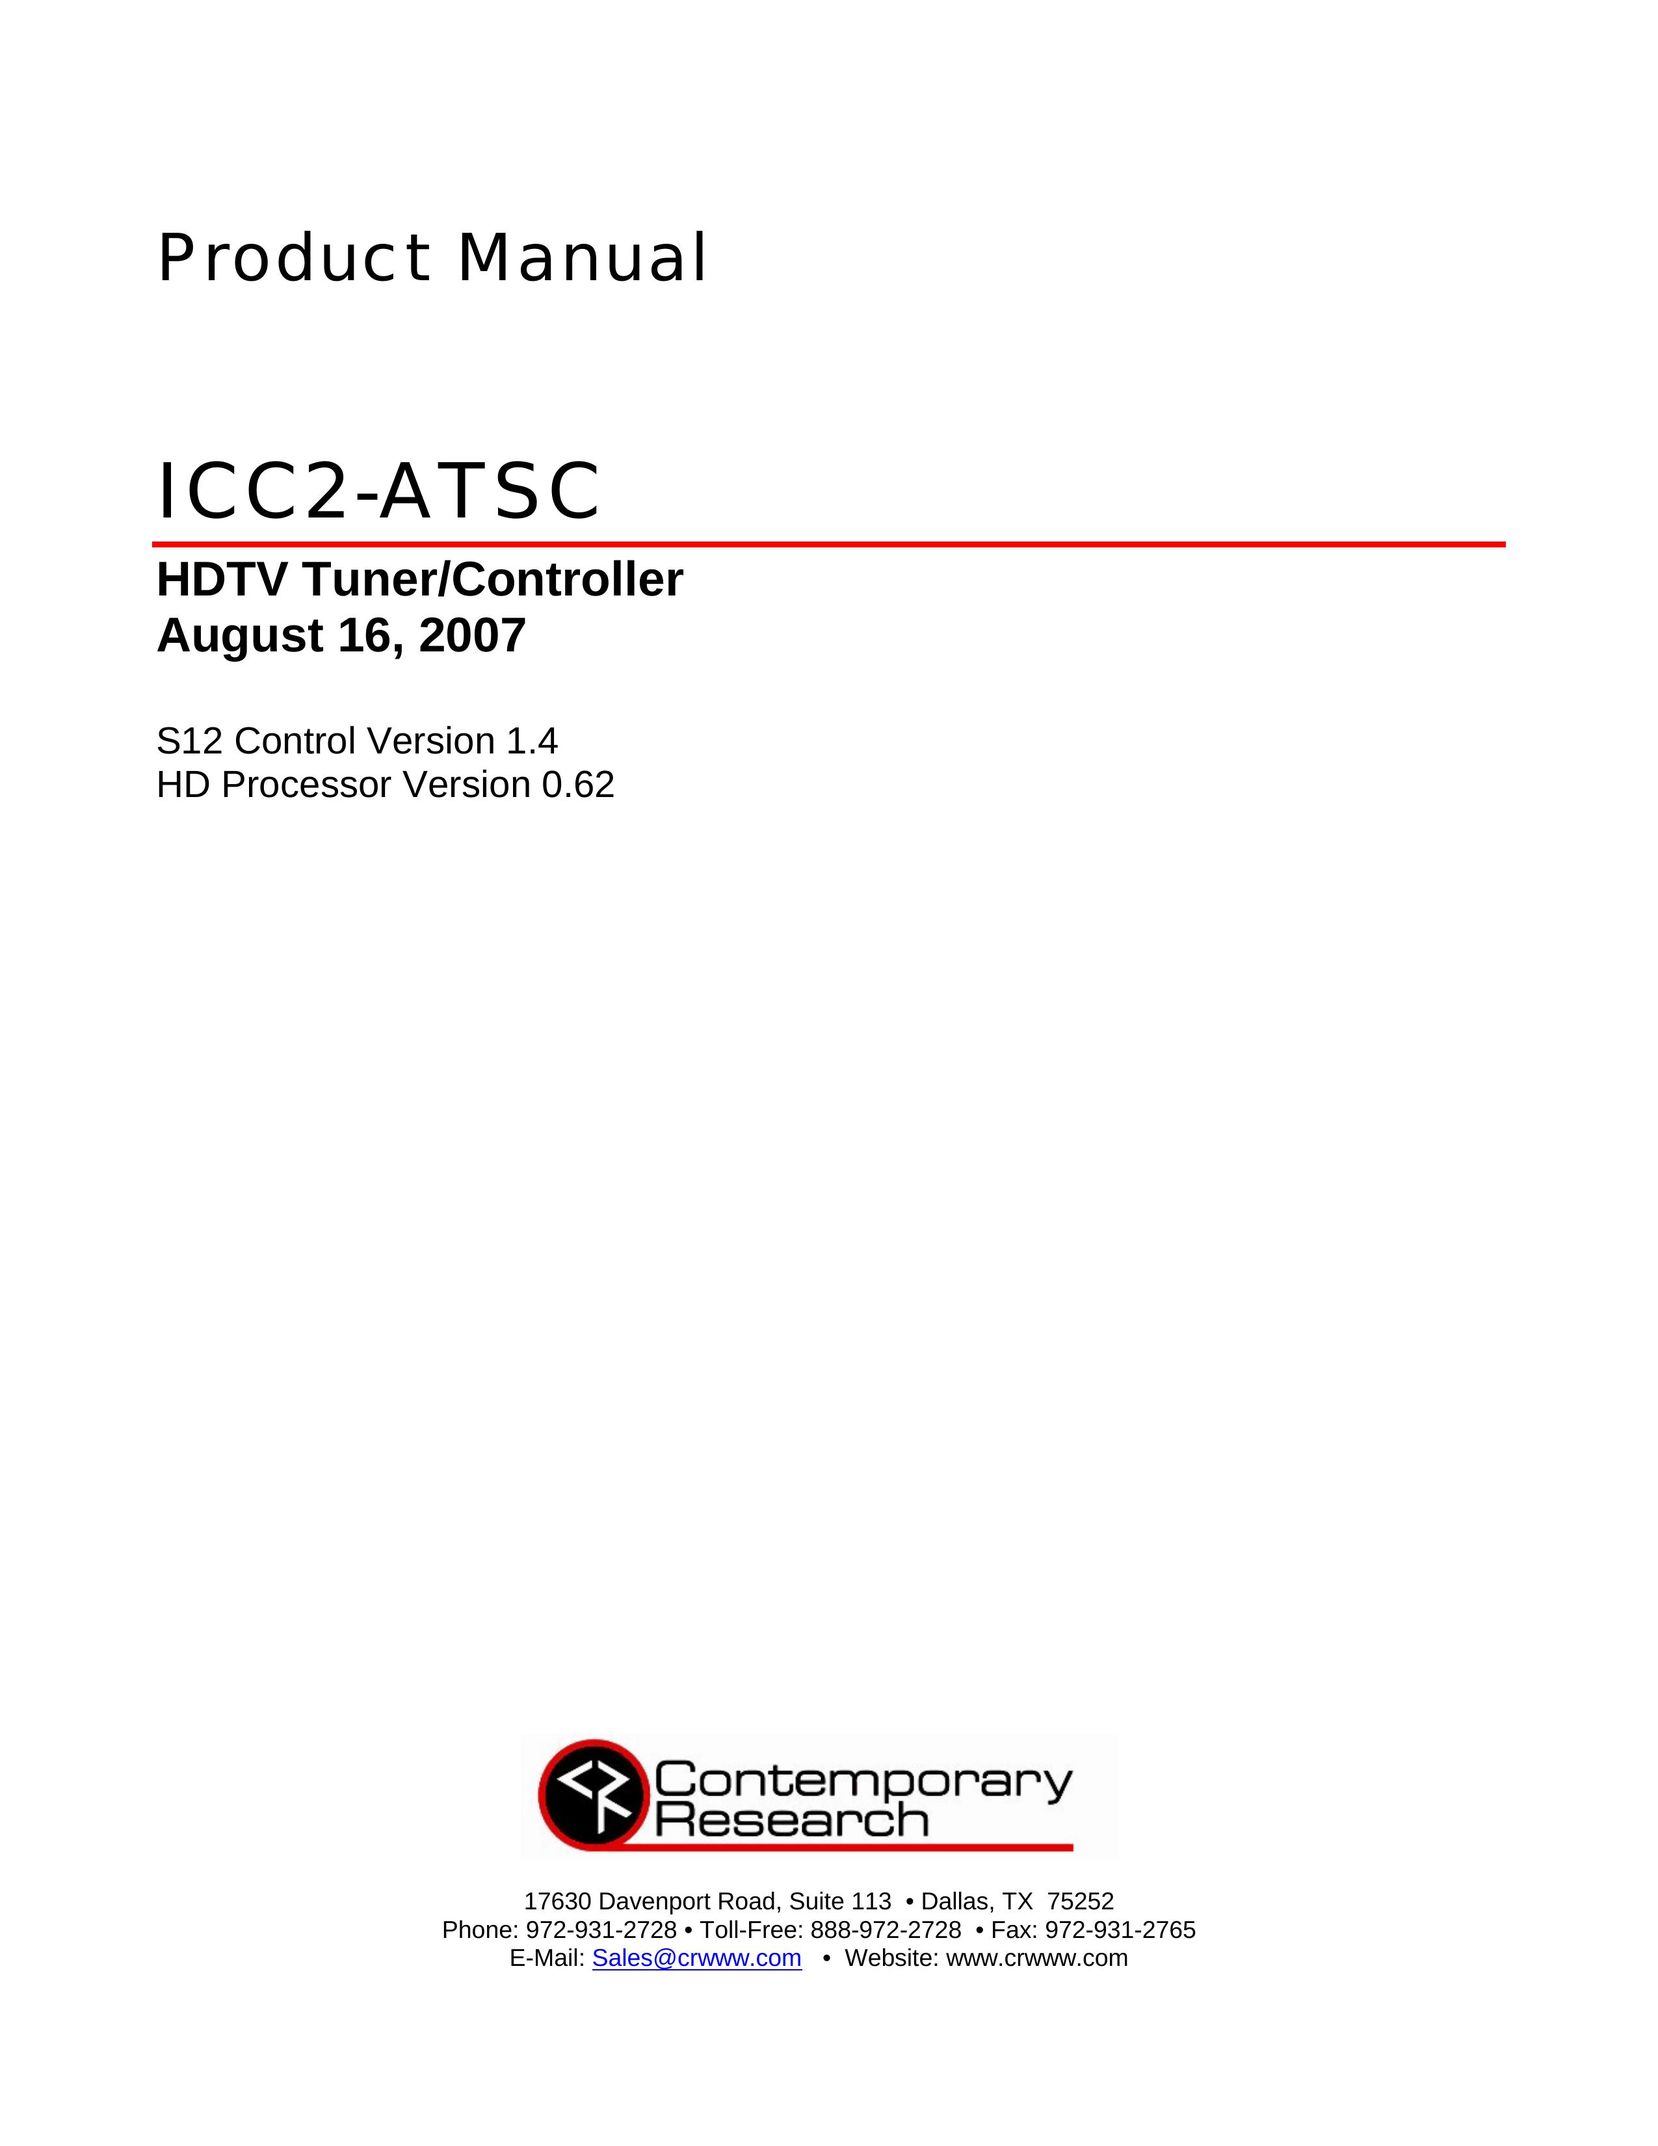 Contemporary Research ICC2-ATSC TV Receiver User Manual